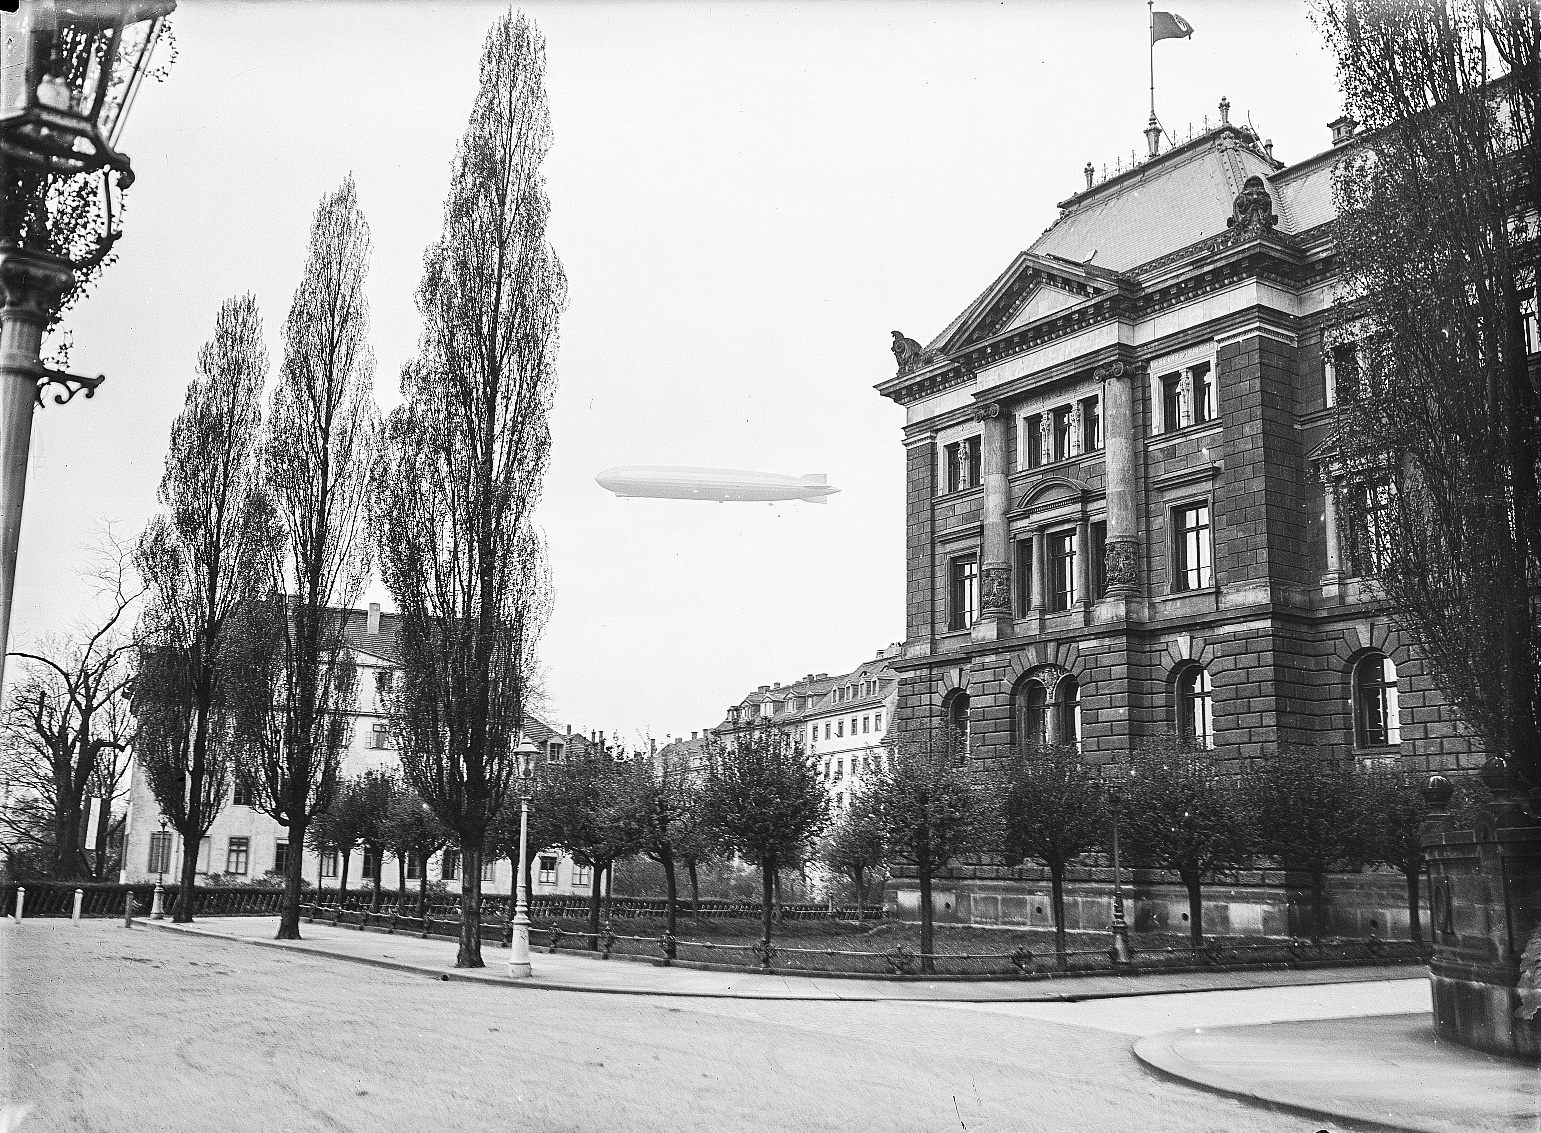 Dresden, Kings with LZ 127 Graf Zeppelin